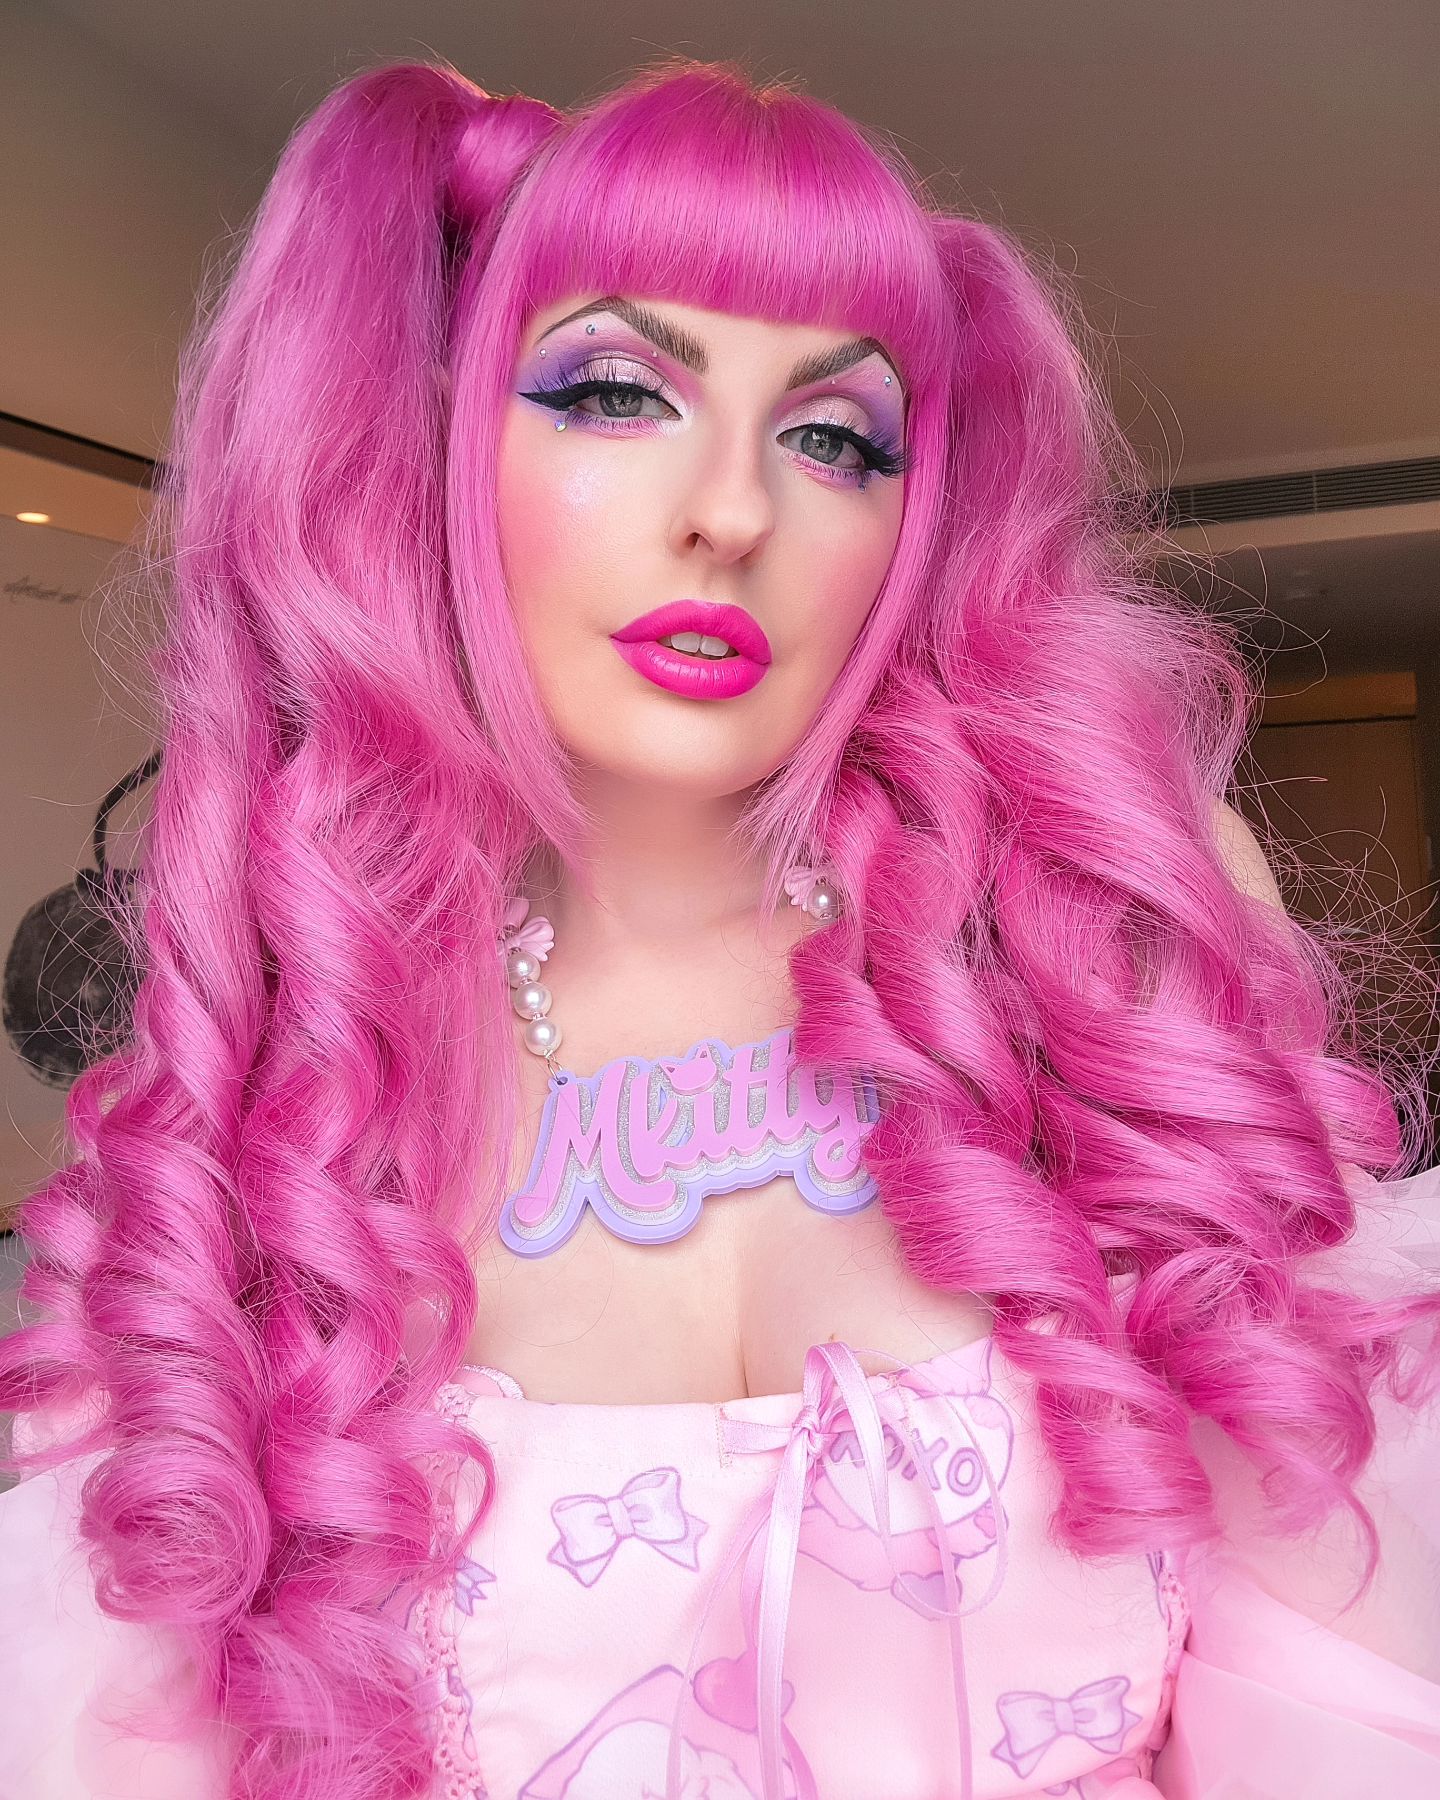 🩷🌸I felt like a Kitty Cupcake with this look🌸🩷

#makeup #makeupartist #pasteleyeshadow #egirl #pink #pinkhair #arcticfox #plouise #urbandecay #colourpop #colourpopme #hauslabs #onesize #gamergirl #streamer